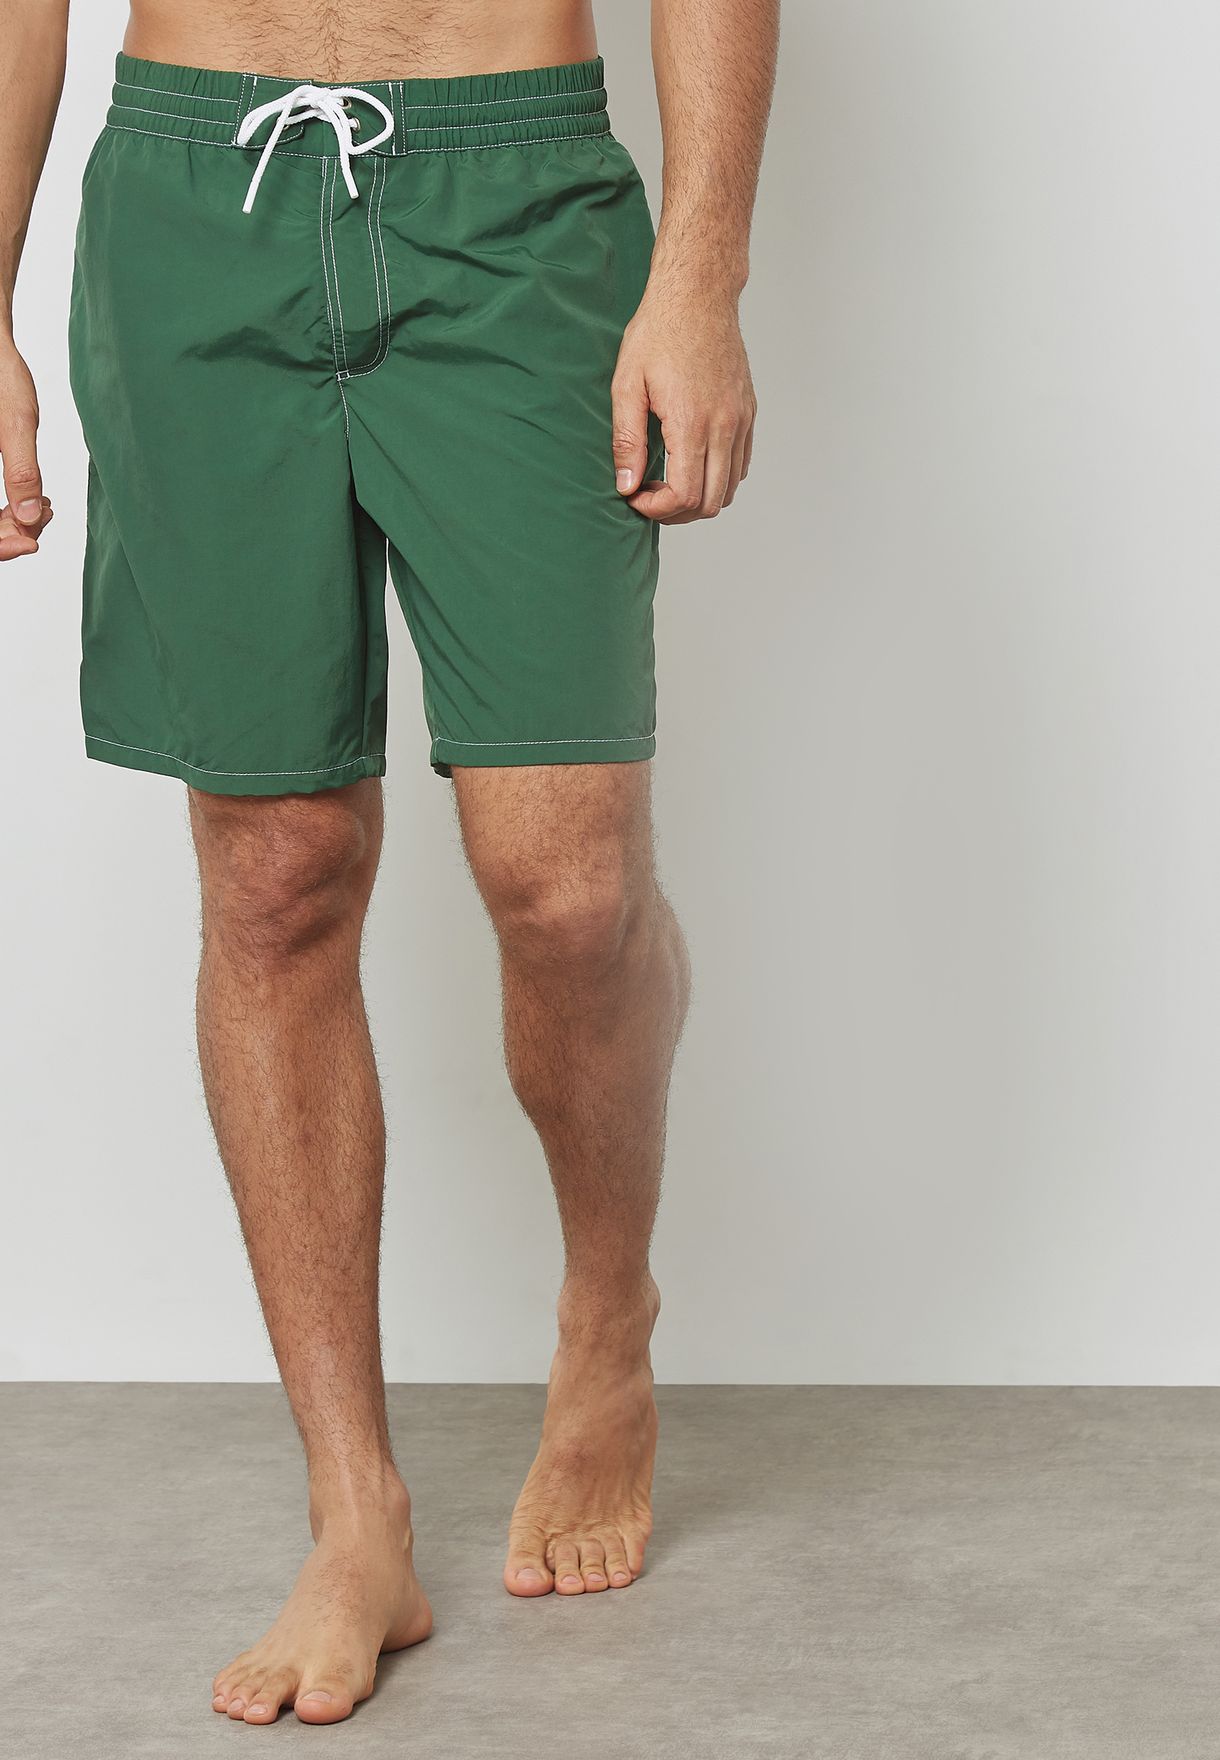 lacoste swim shorts green